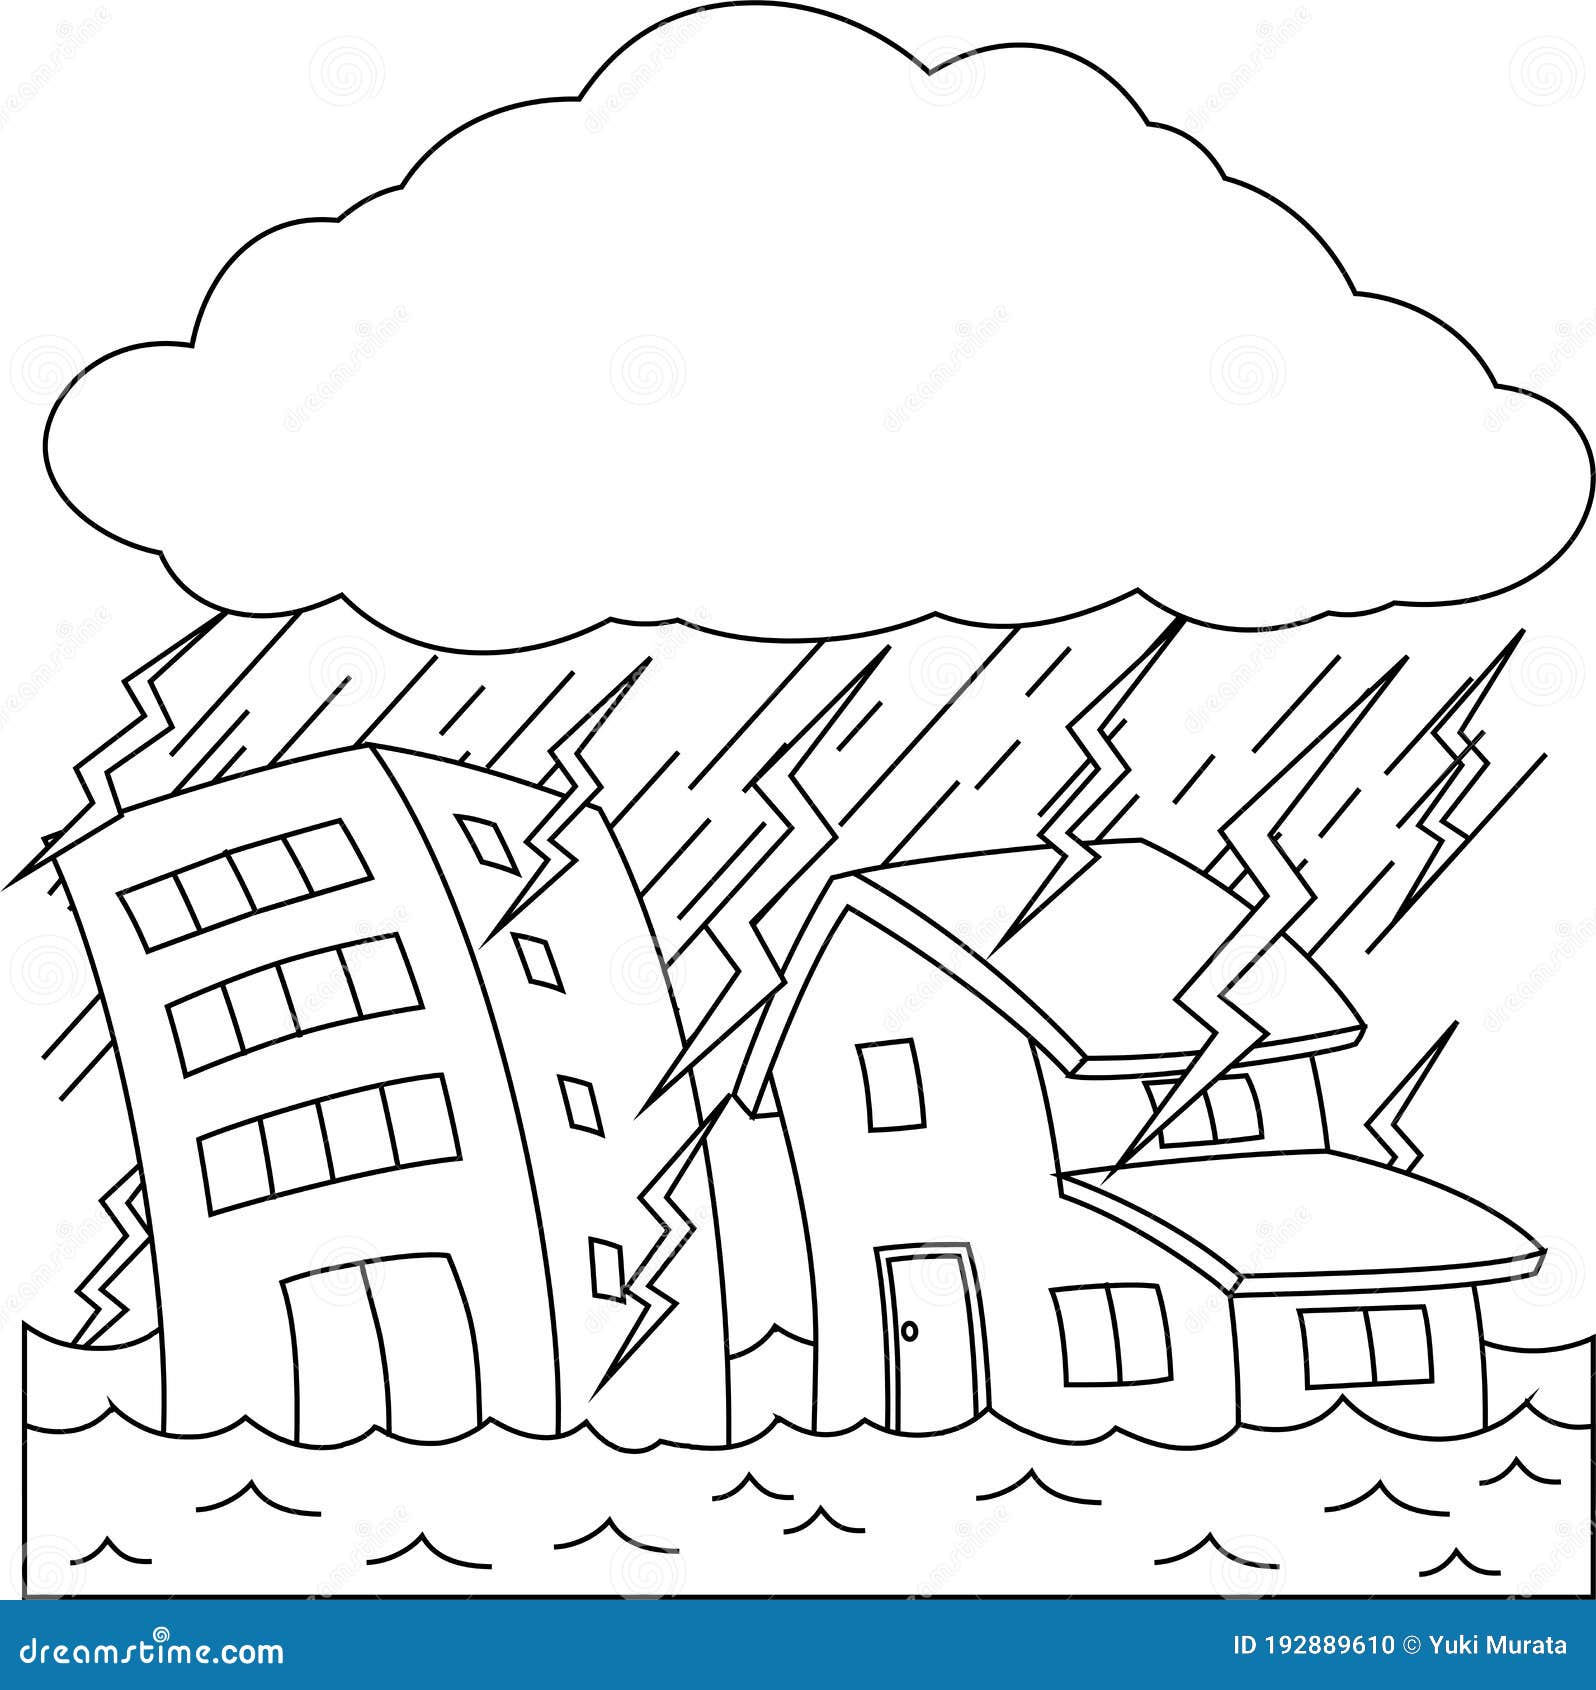 Free Vectors | Disaster prevention rain heavy rain sea river roof